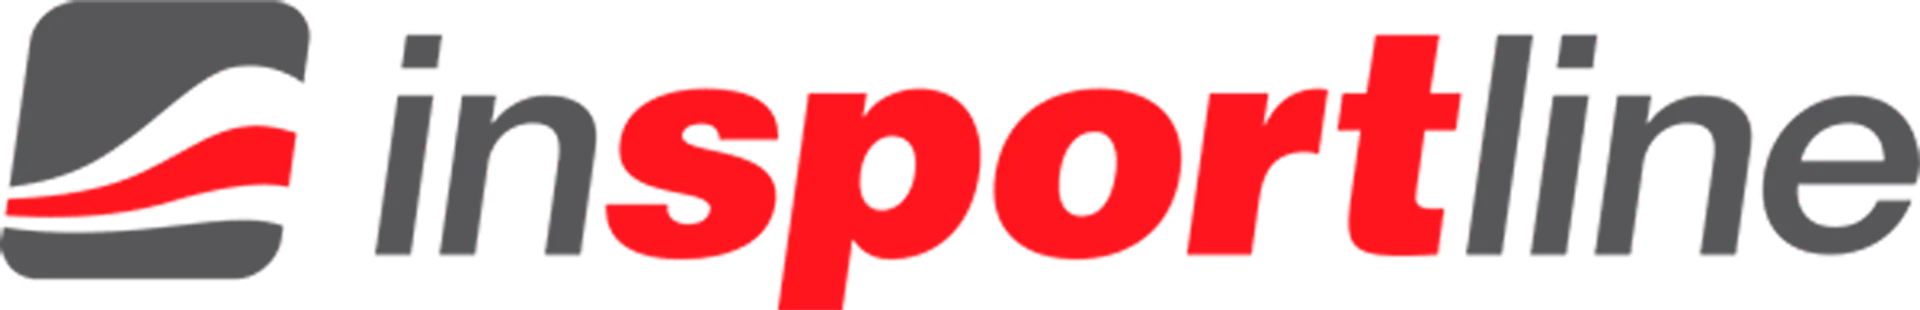 INSPORTLINE logo of current catalogue